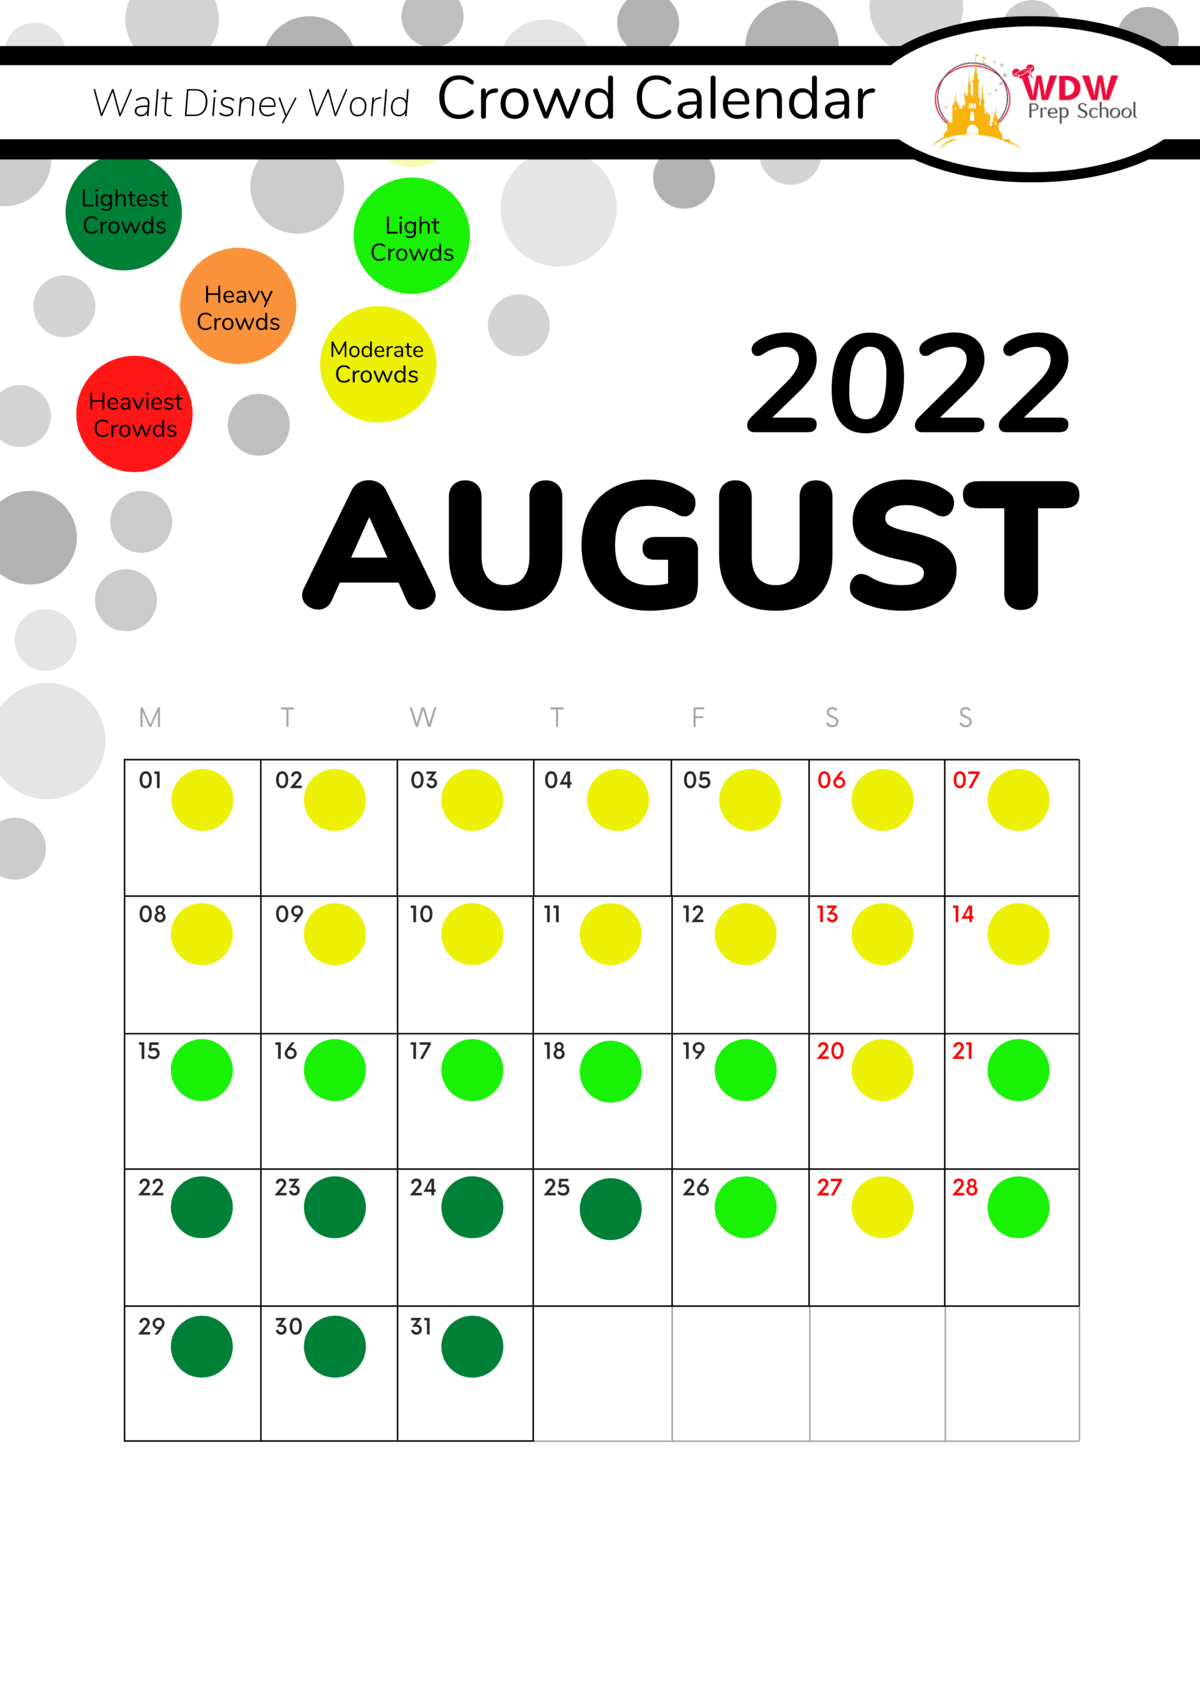 Get Disney Crowd Calendar August 2022